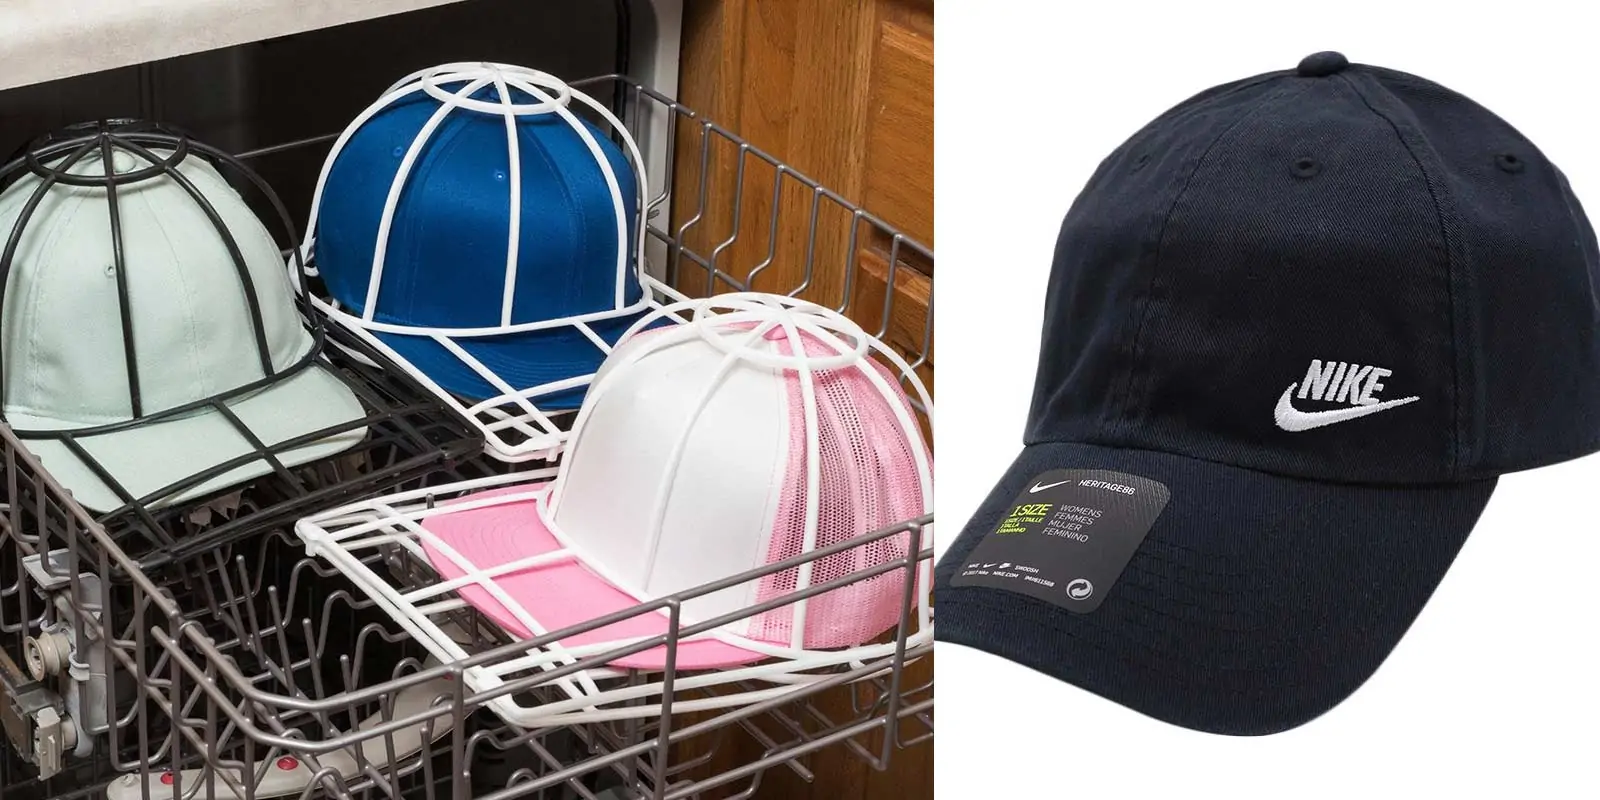 wash hats in the dishwasher